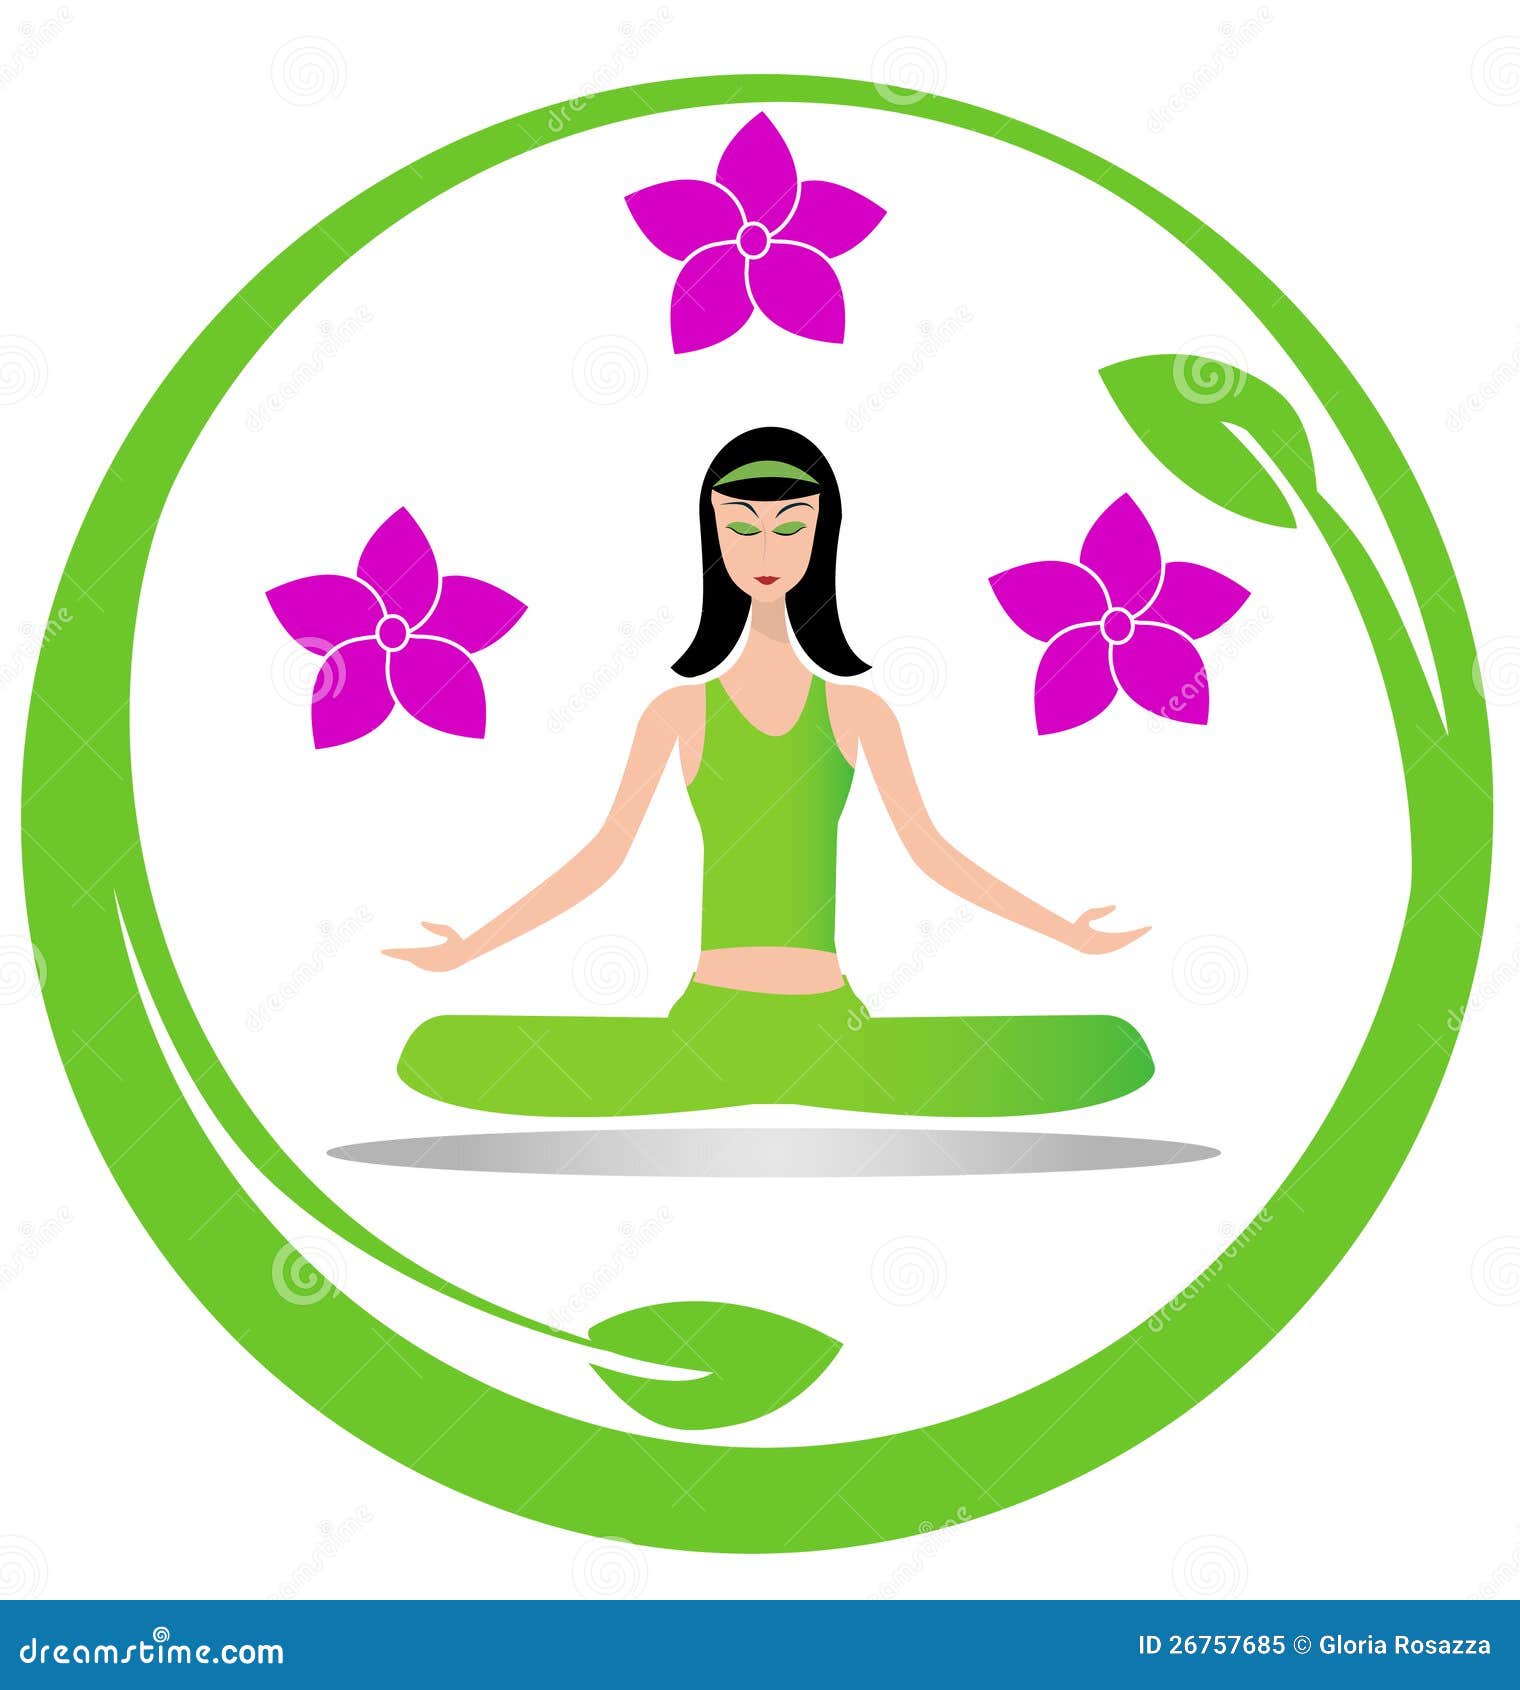 yoga logo clip art - photo #14